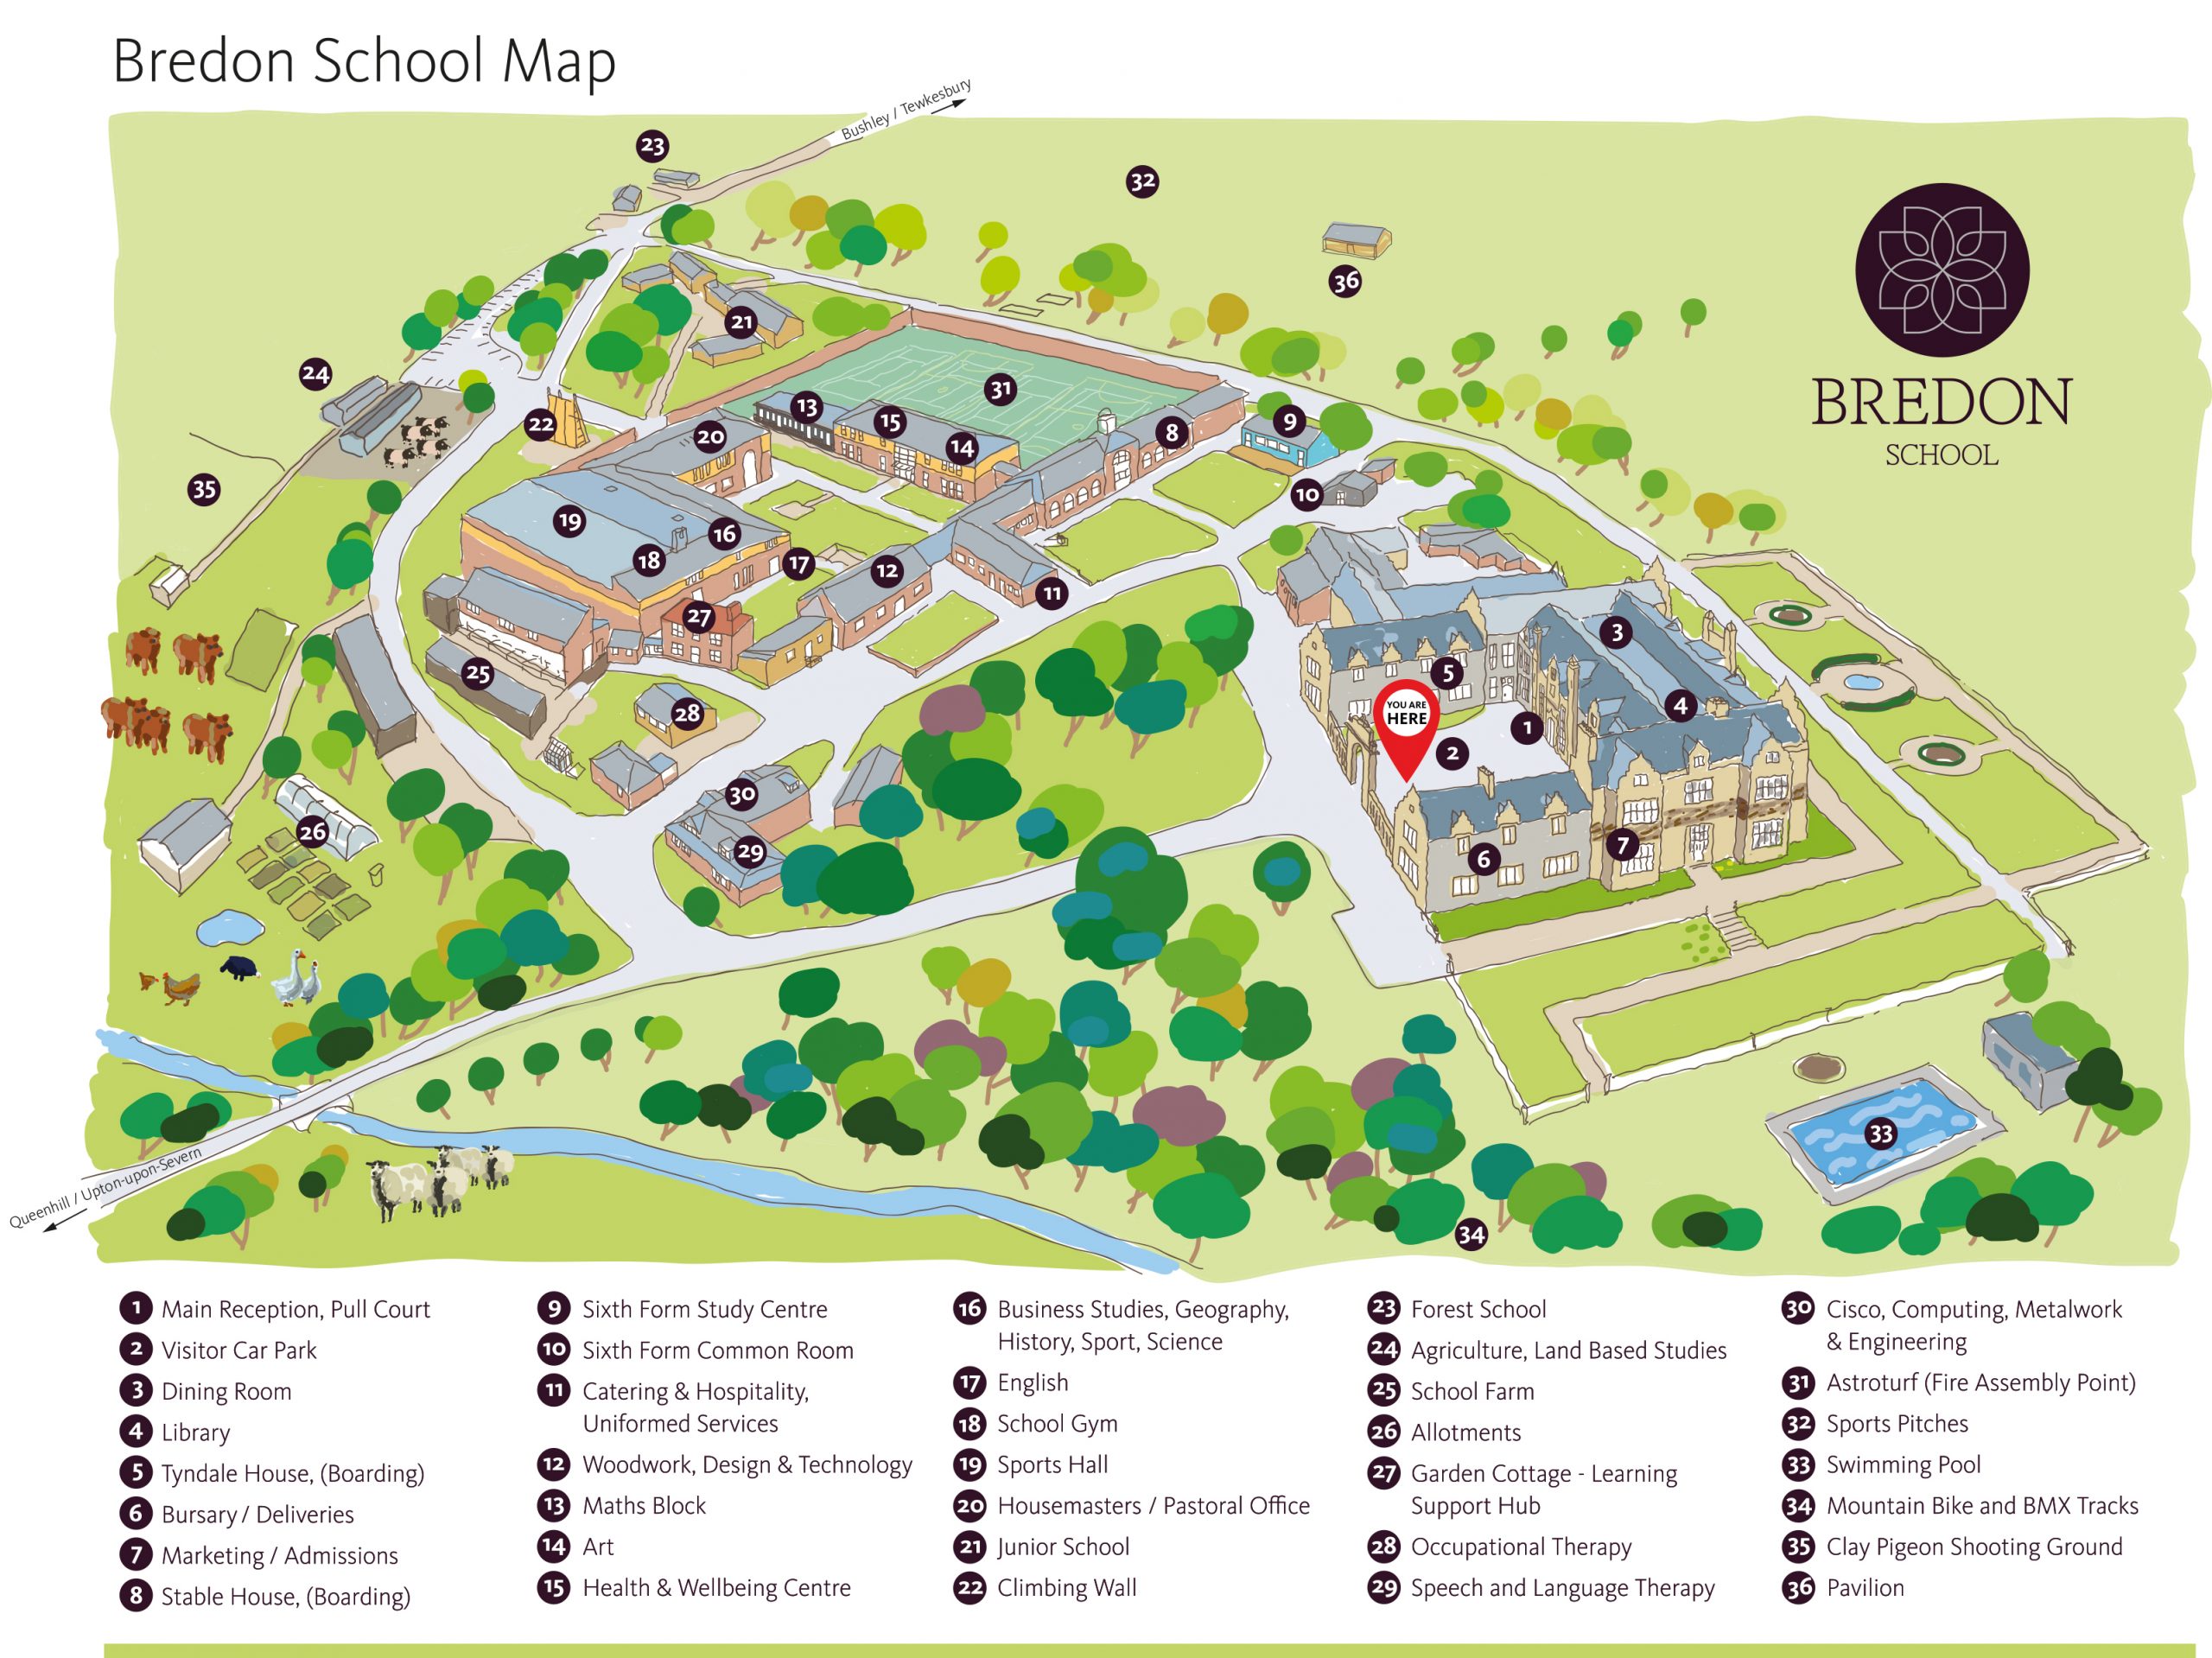 Bredon school map design and artwork